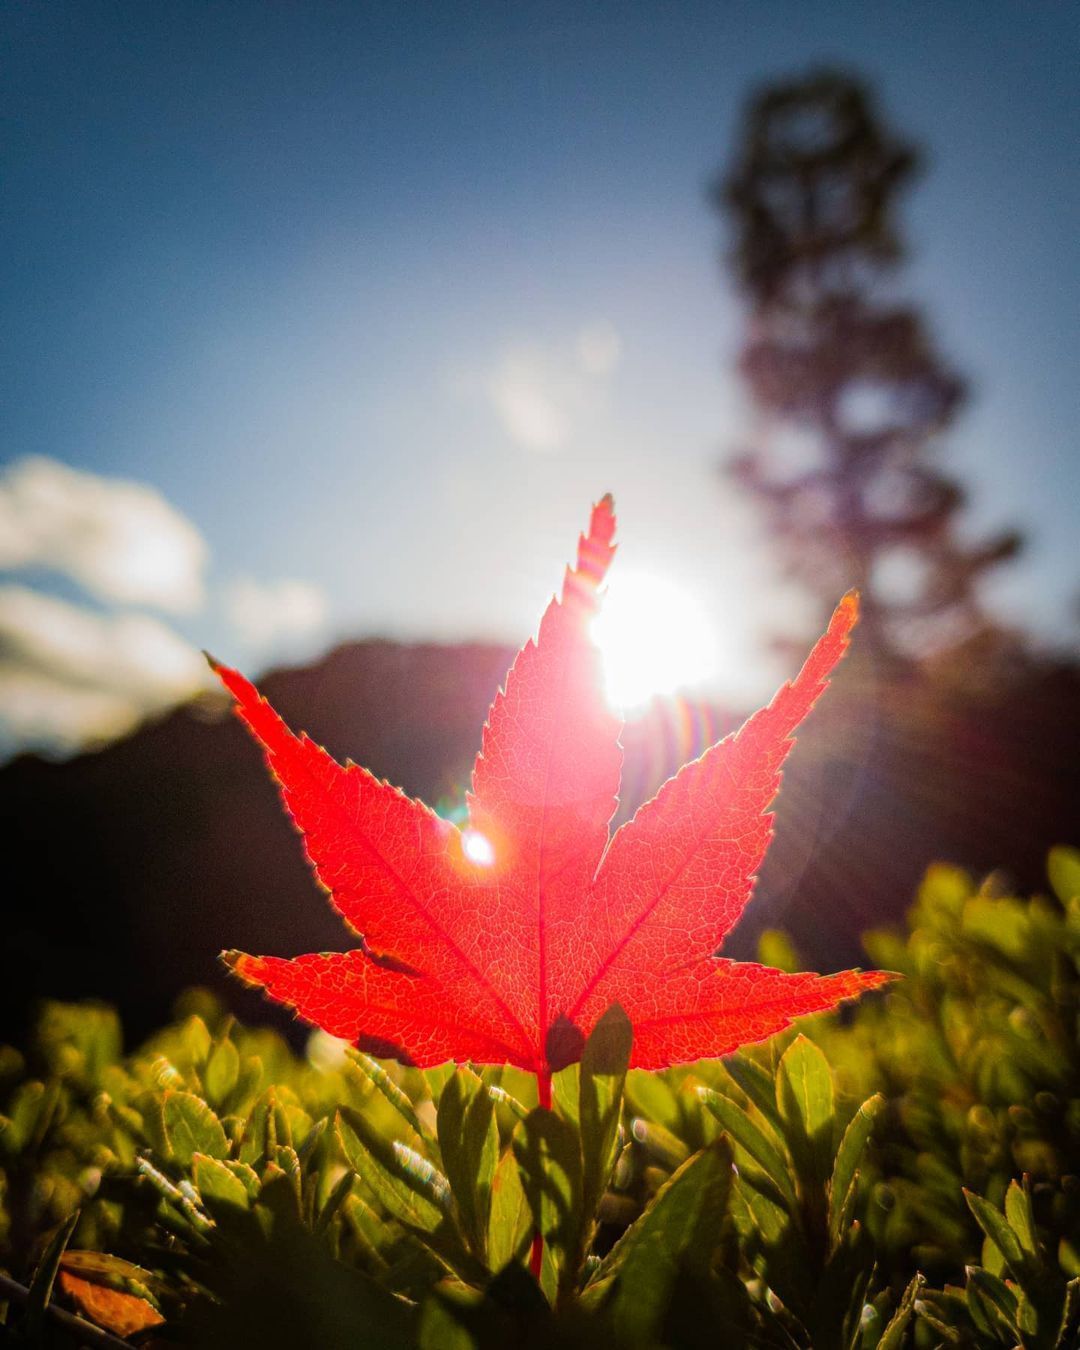 La belleza de las hojas de otoño en el Templo Eihoji, en Gifu, Japón.Feliz amanecer.¿Que sitio de Japón te gustaría visitar?Gracias gracias gracias, un abrazo de luz, Gassho, Dino#reikivenezuela #reikimaracaibo #reikizulia #reikisalud#TemploEihoji #Gifu